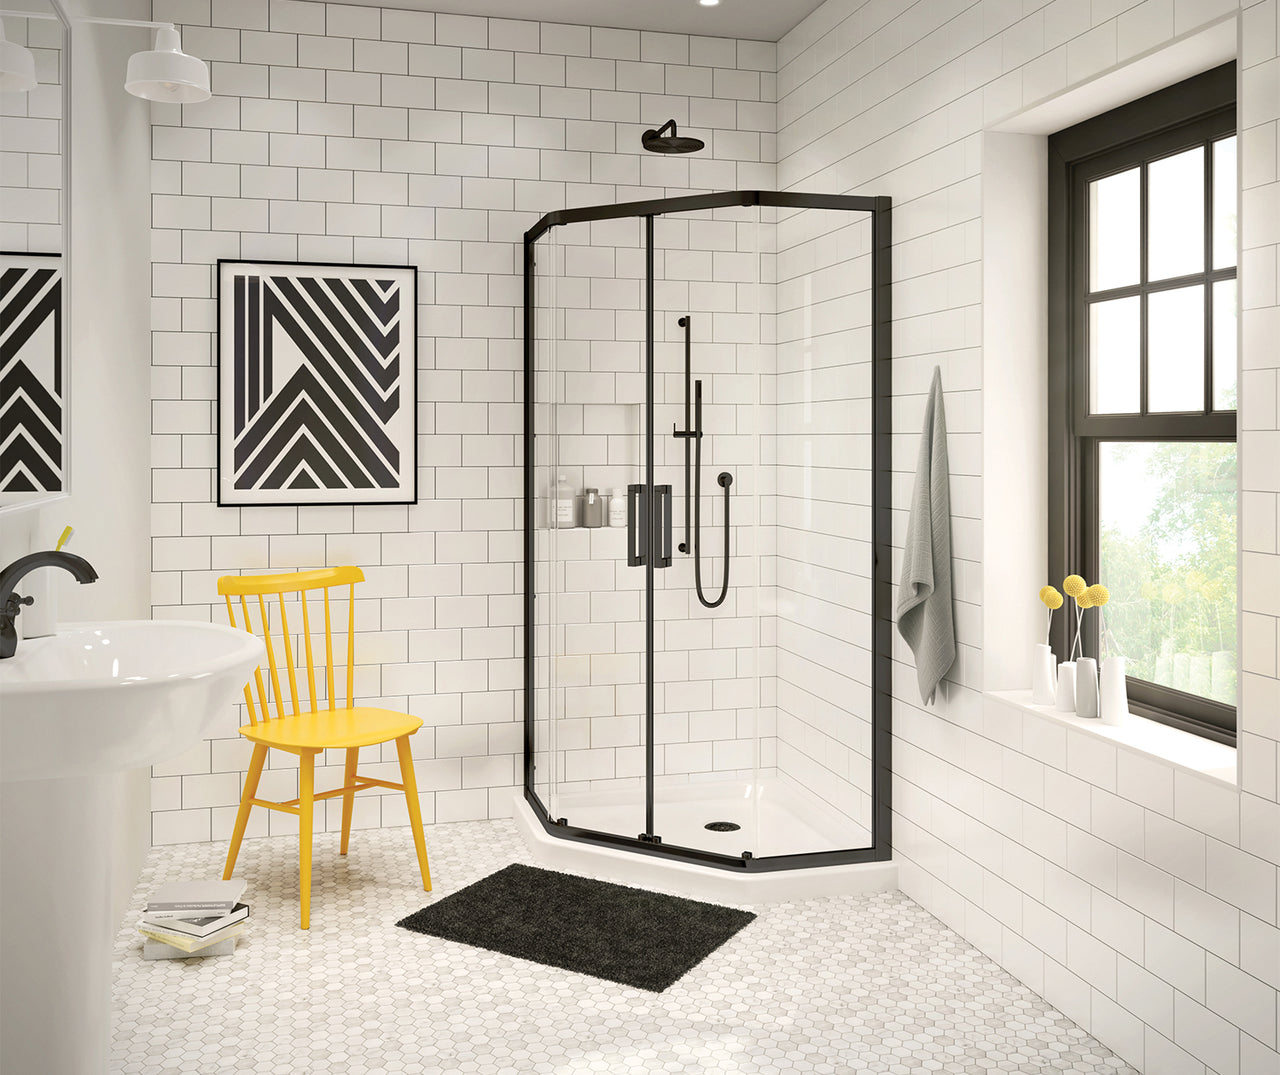 Radia Neo-round Sliding Shower Door 36 x 36 x 71 ½ in. 6 mm Corner Shower door - BNGBath